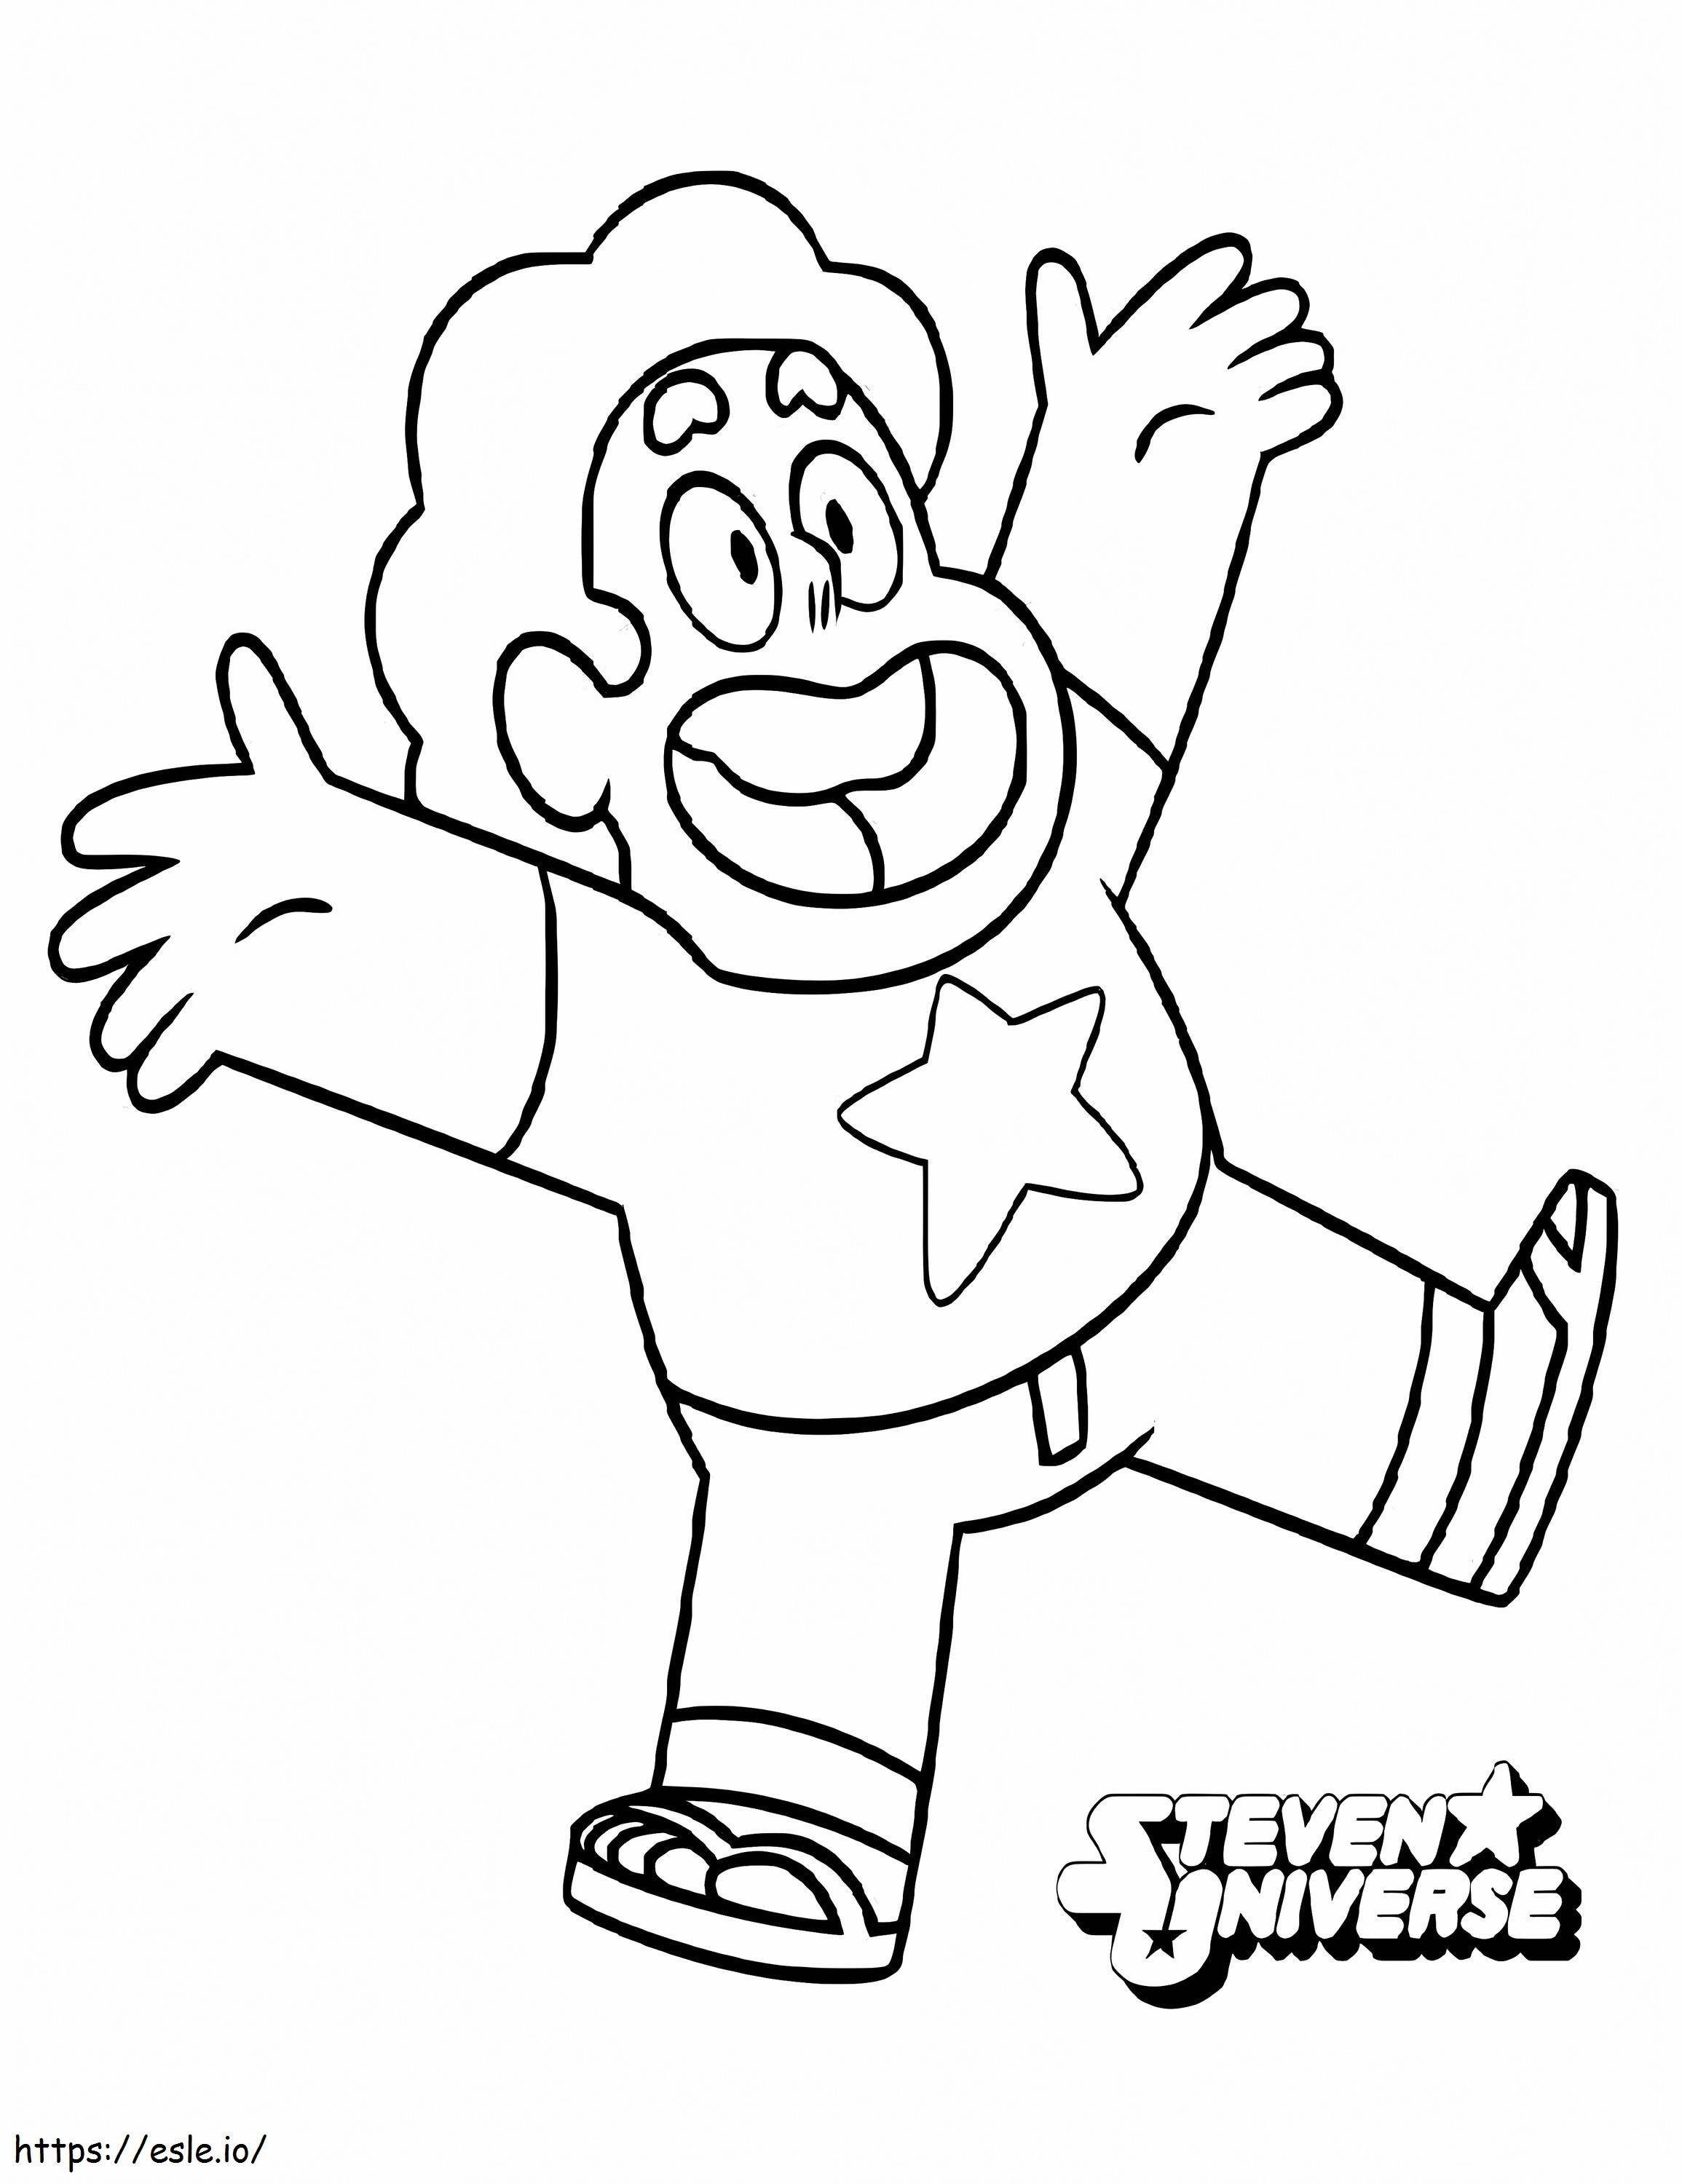 1579058717 Happy Steven Universe coloring page